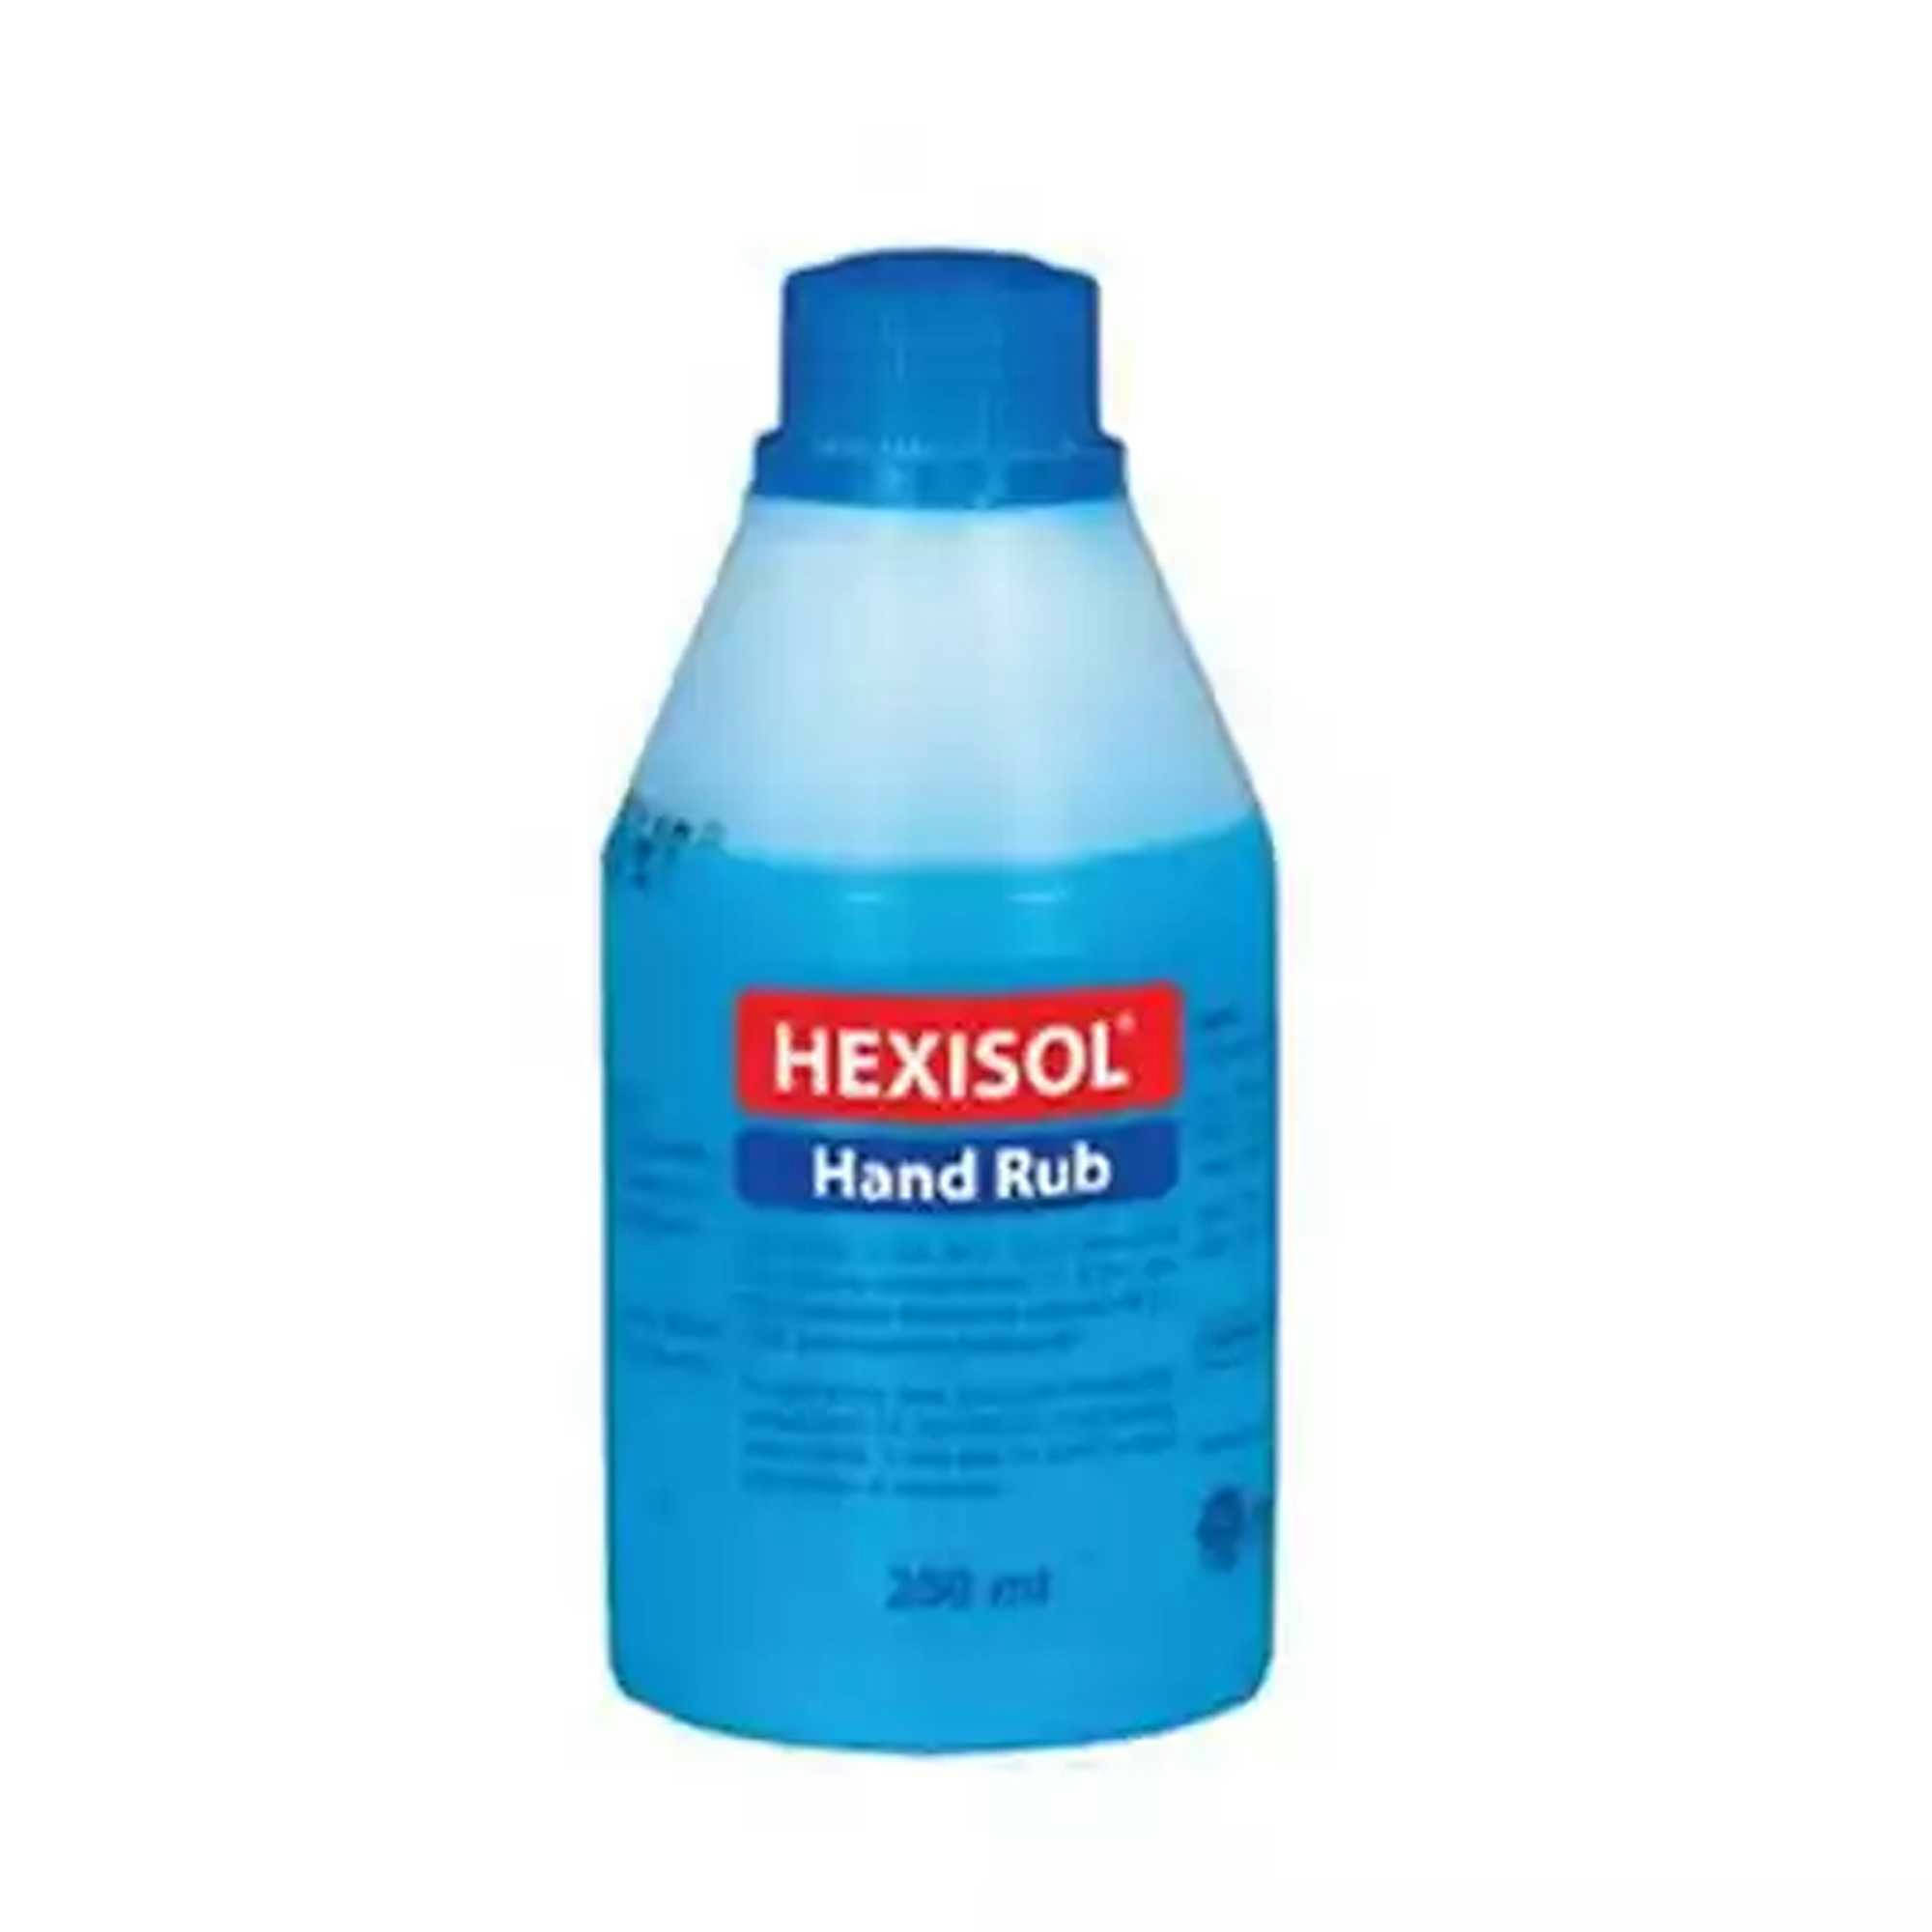 Hexisol Hand Rub